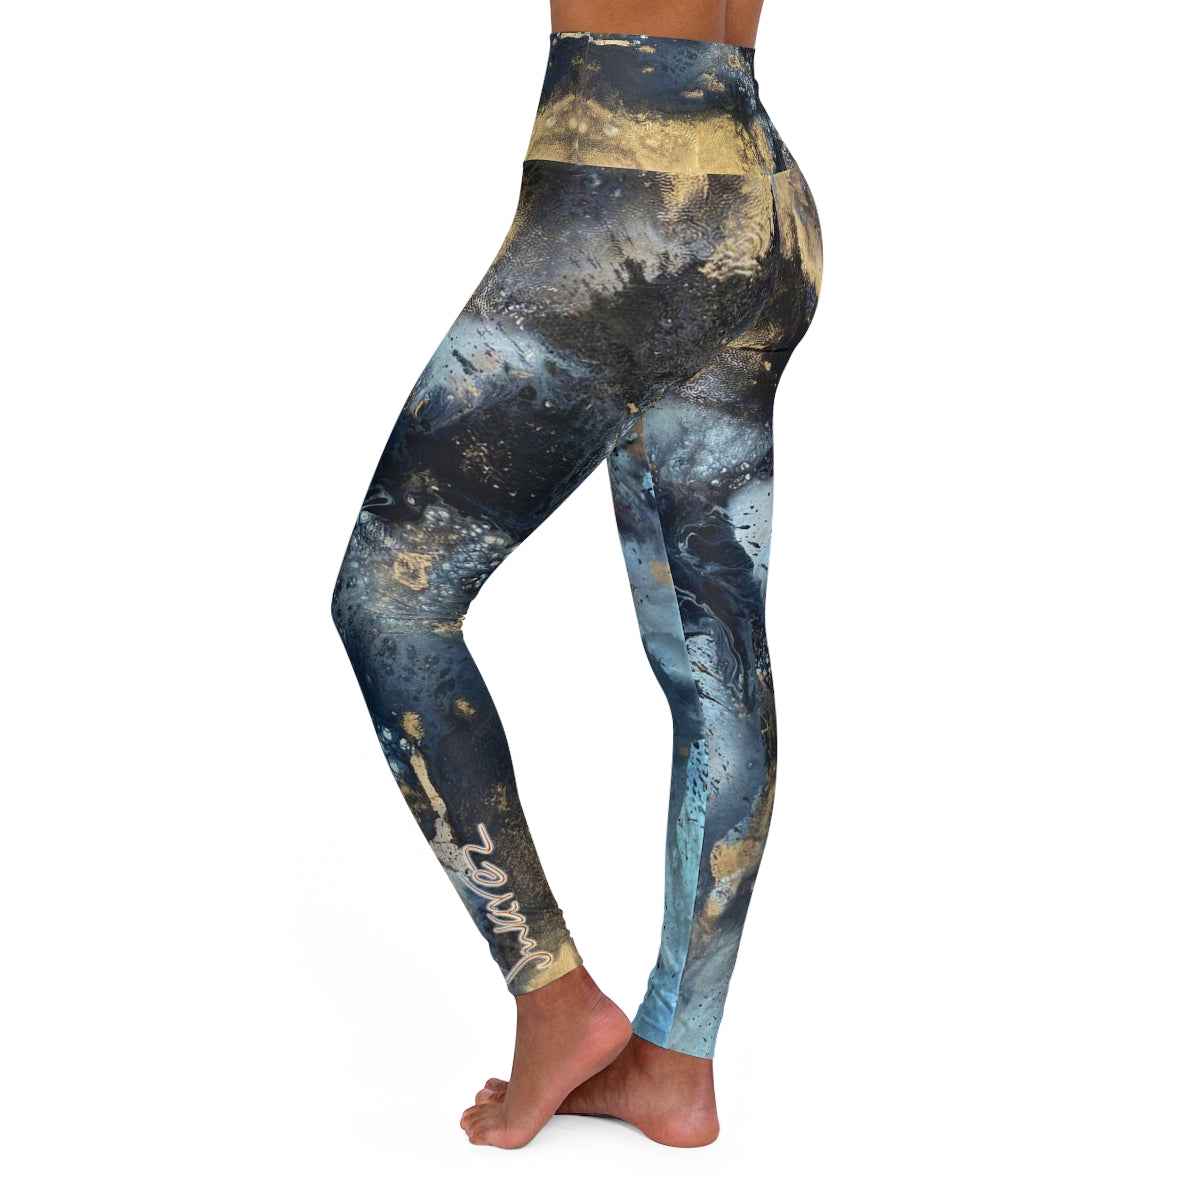 High Waisted Yoga Leggings - Aqua and gold design